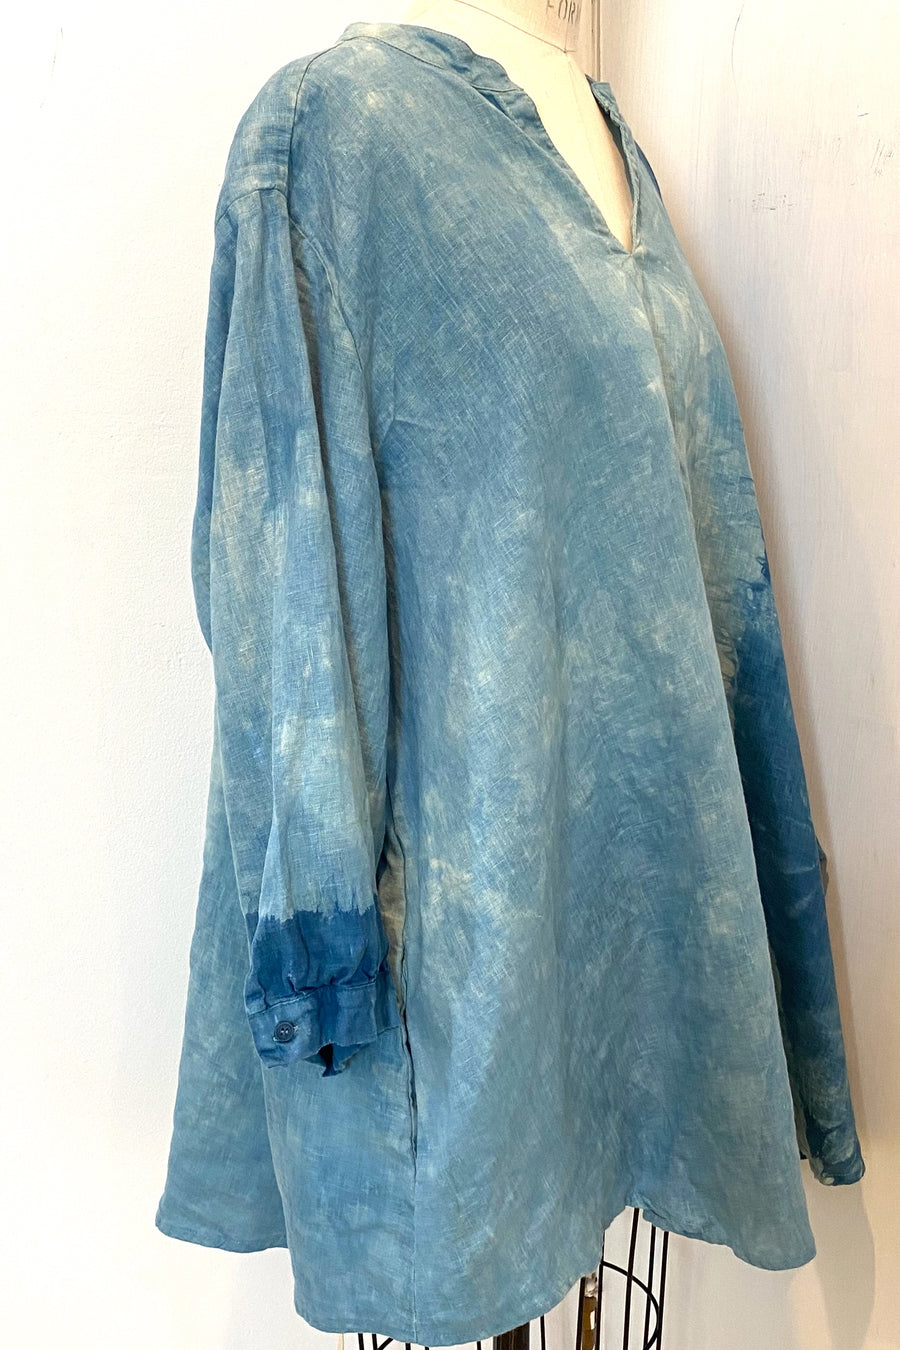 Botanically Dyed Linen Tunic in Blue Size 2